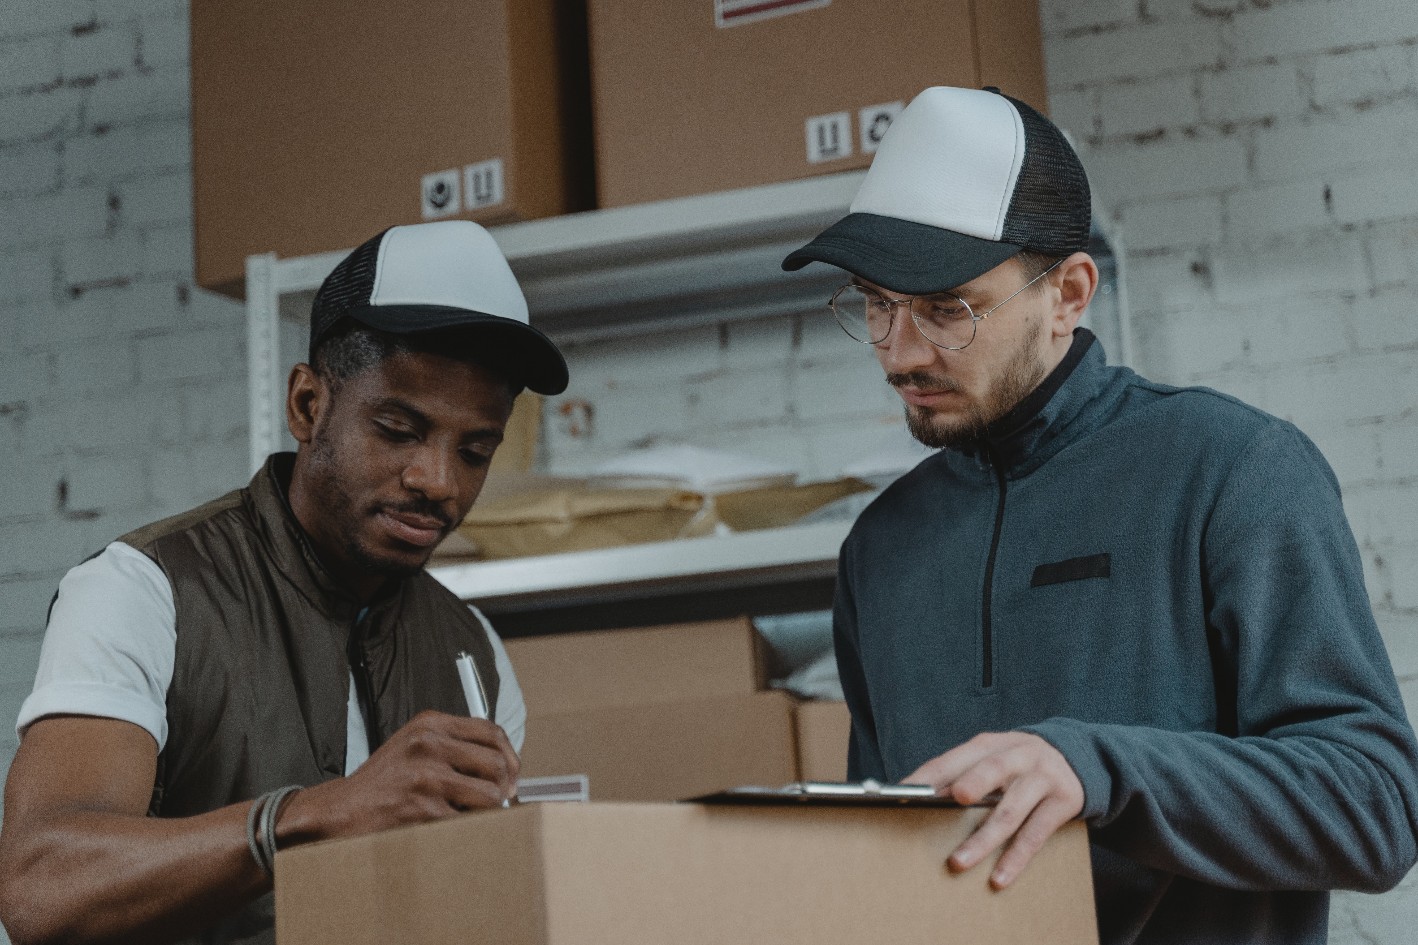 Two men prepare a box for moving